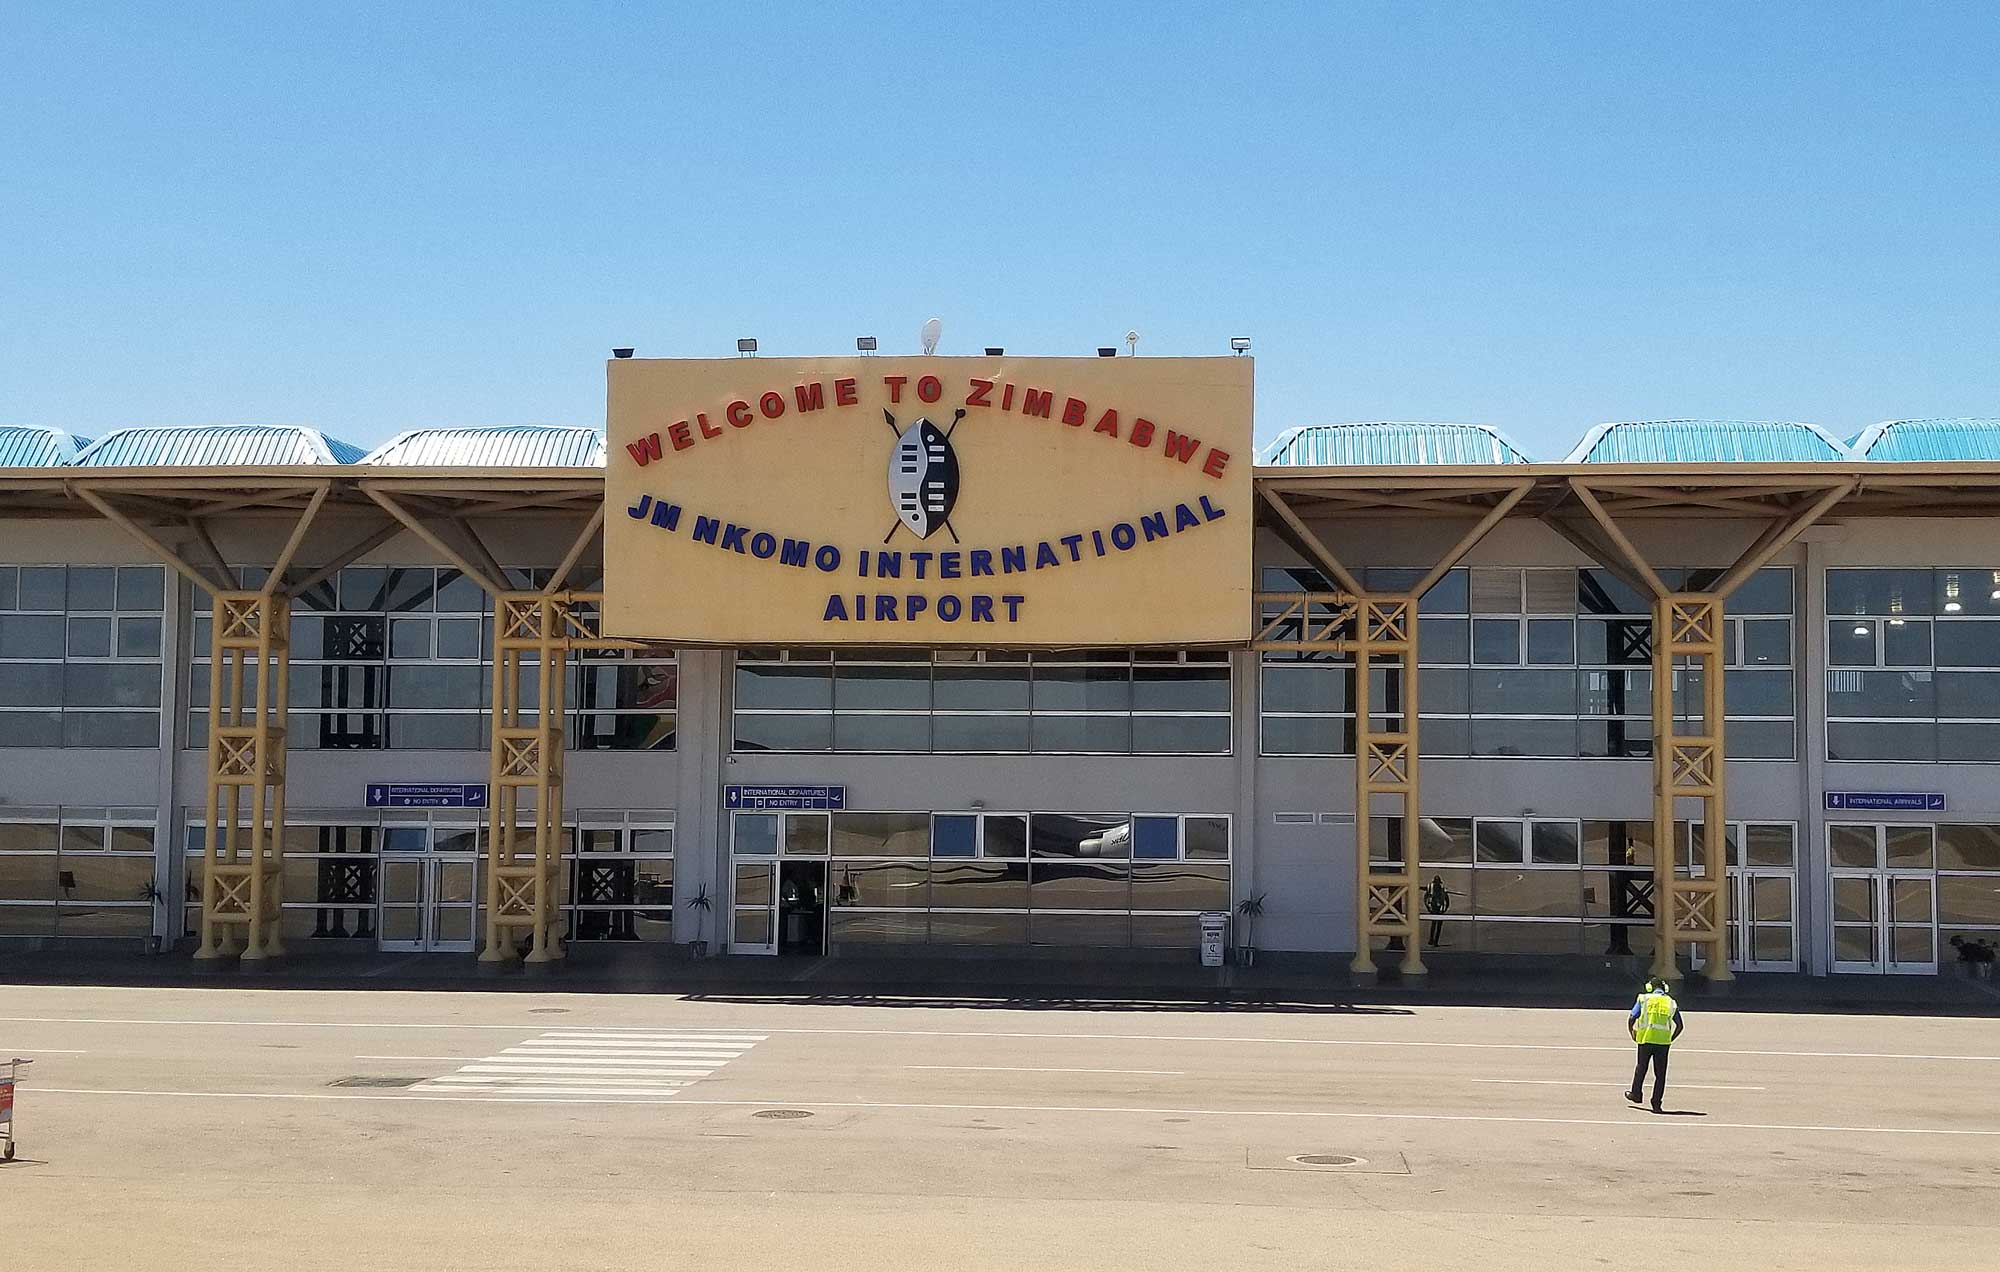 Welcome to Zimbabwe - Joshua Nkomo International Airport Bulawayo